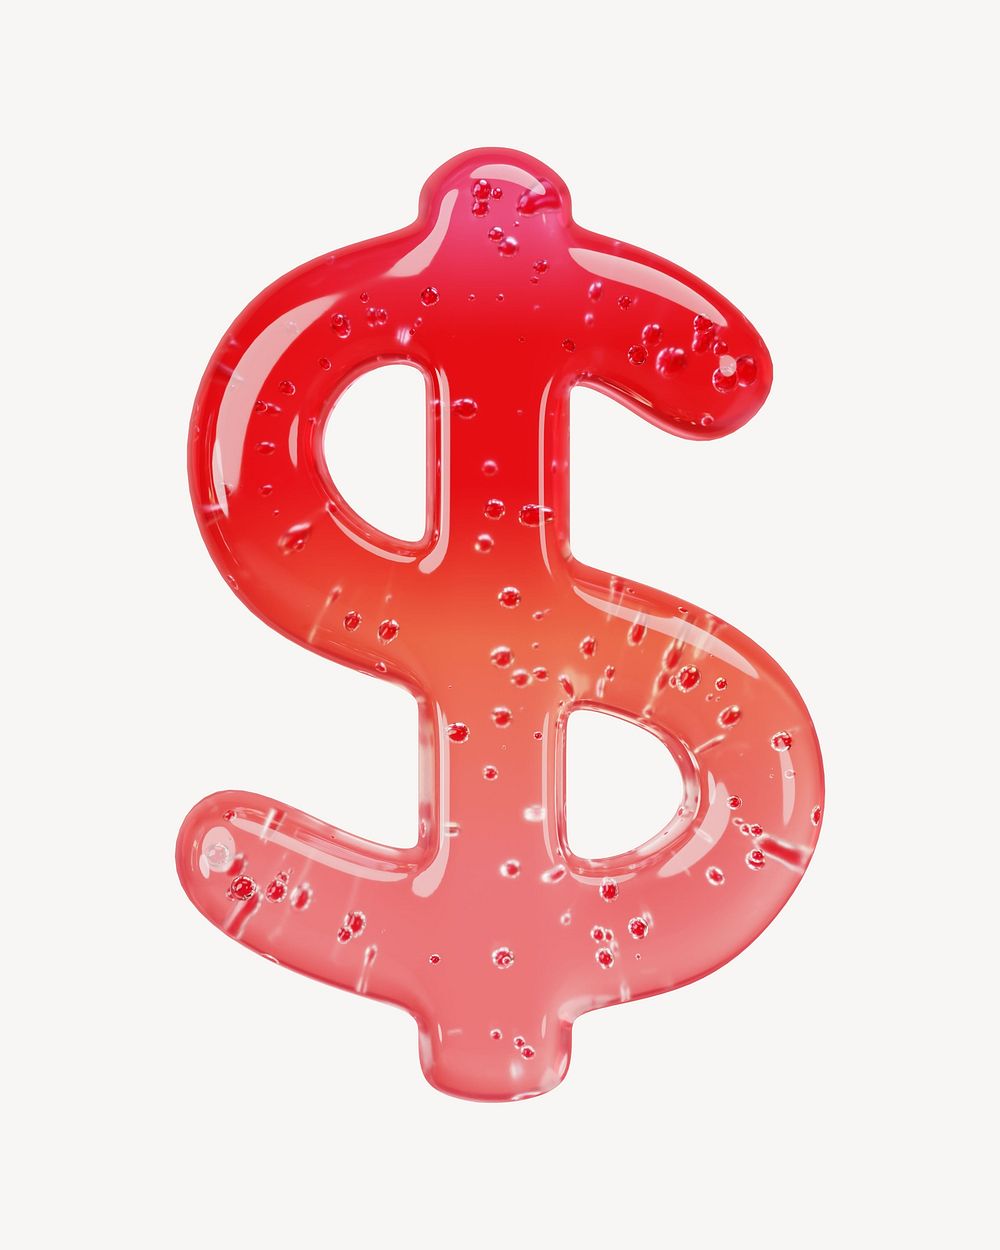 Dollar sign, 3D red jelly symbol illustration